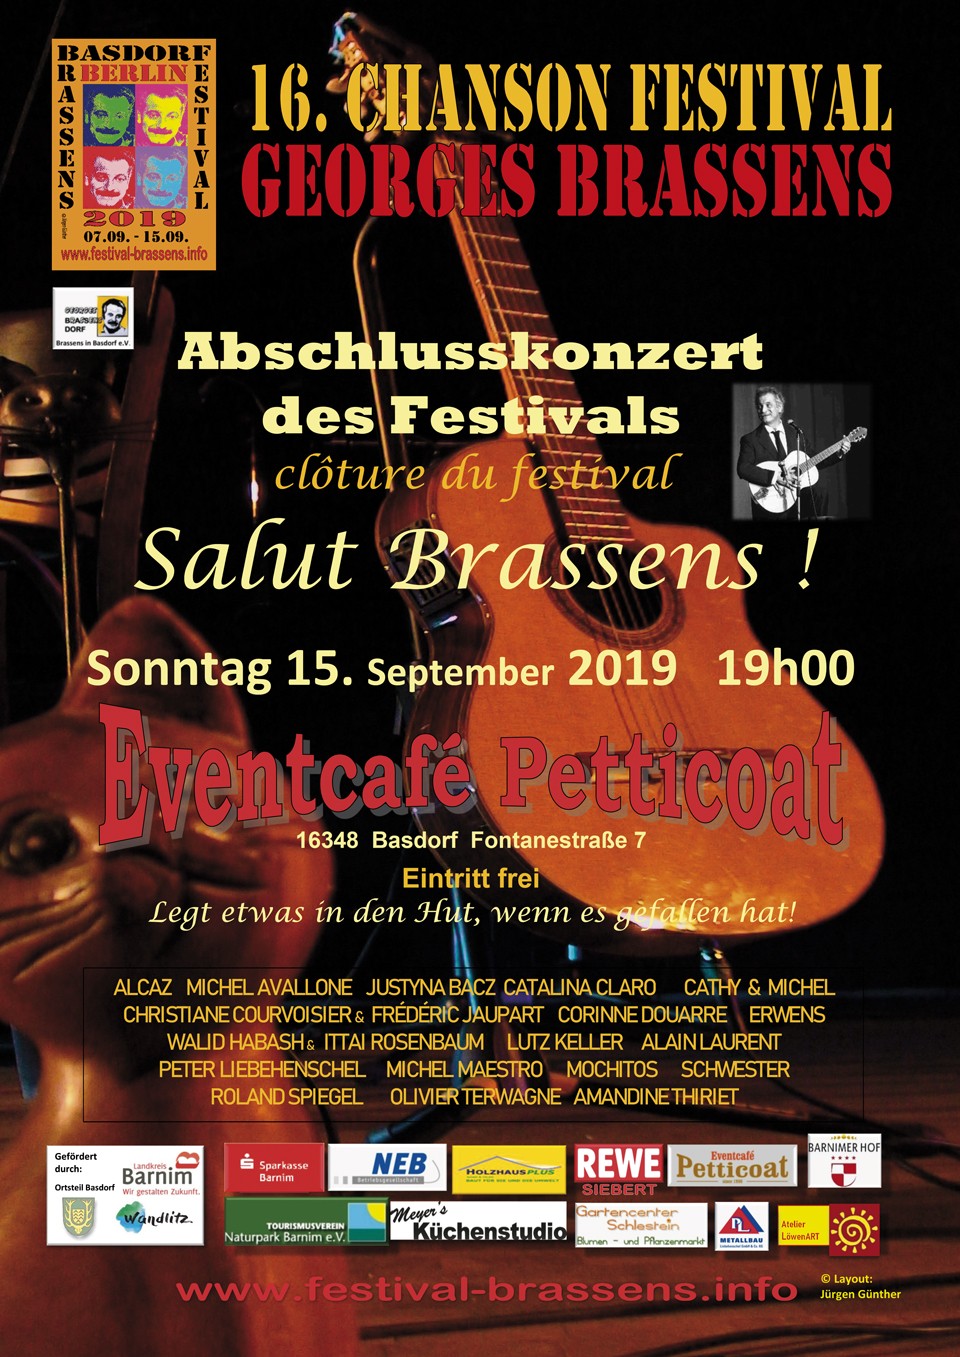 Basdorf Festival Brassens im Eventcafé Petticoat